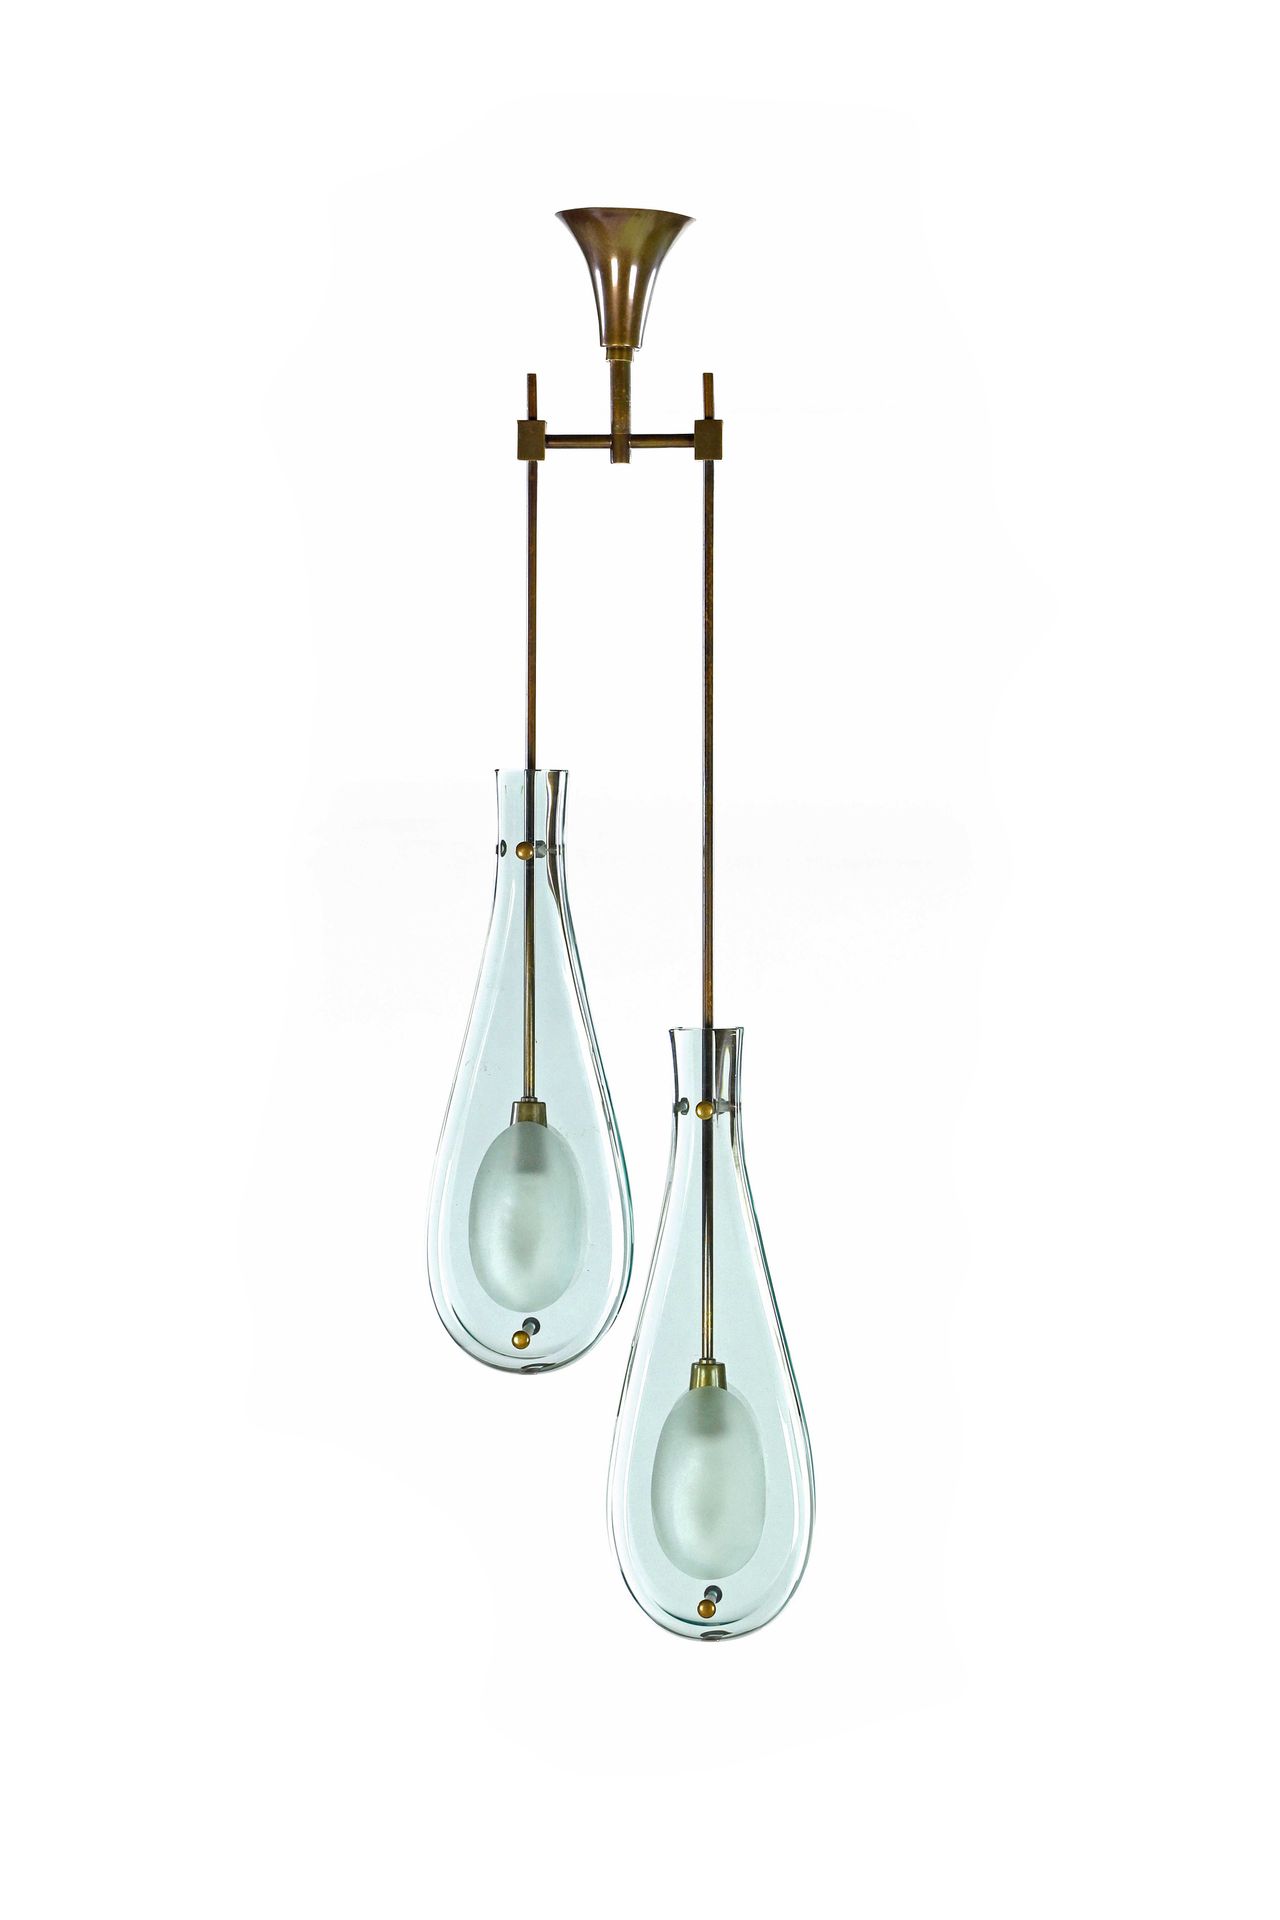 Max INGRAND (1908-1969) Lámpara colgante 2258 
Vidrio, latón
H. 102 cm.
Fontana &hellip;